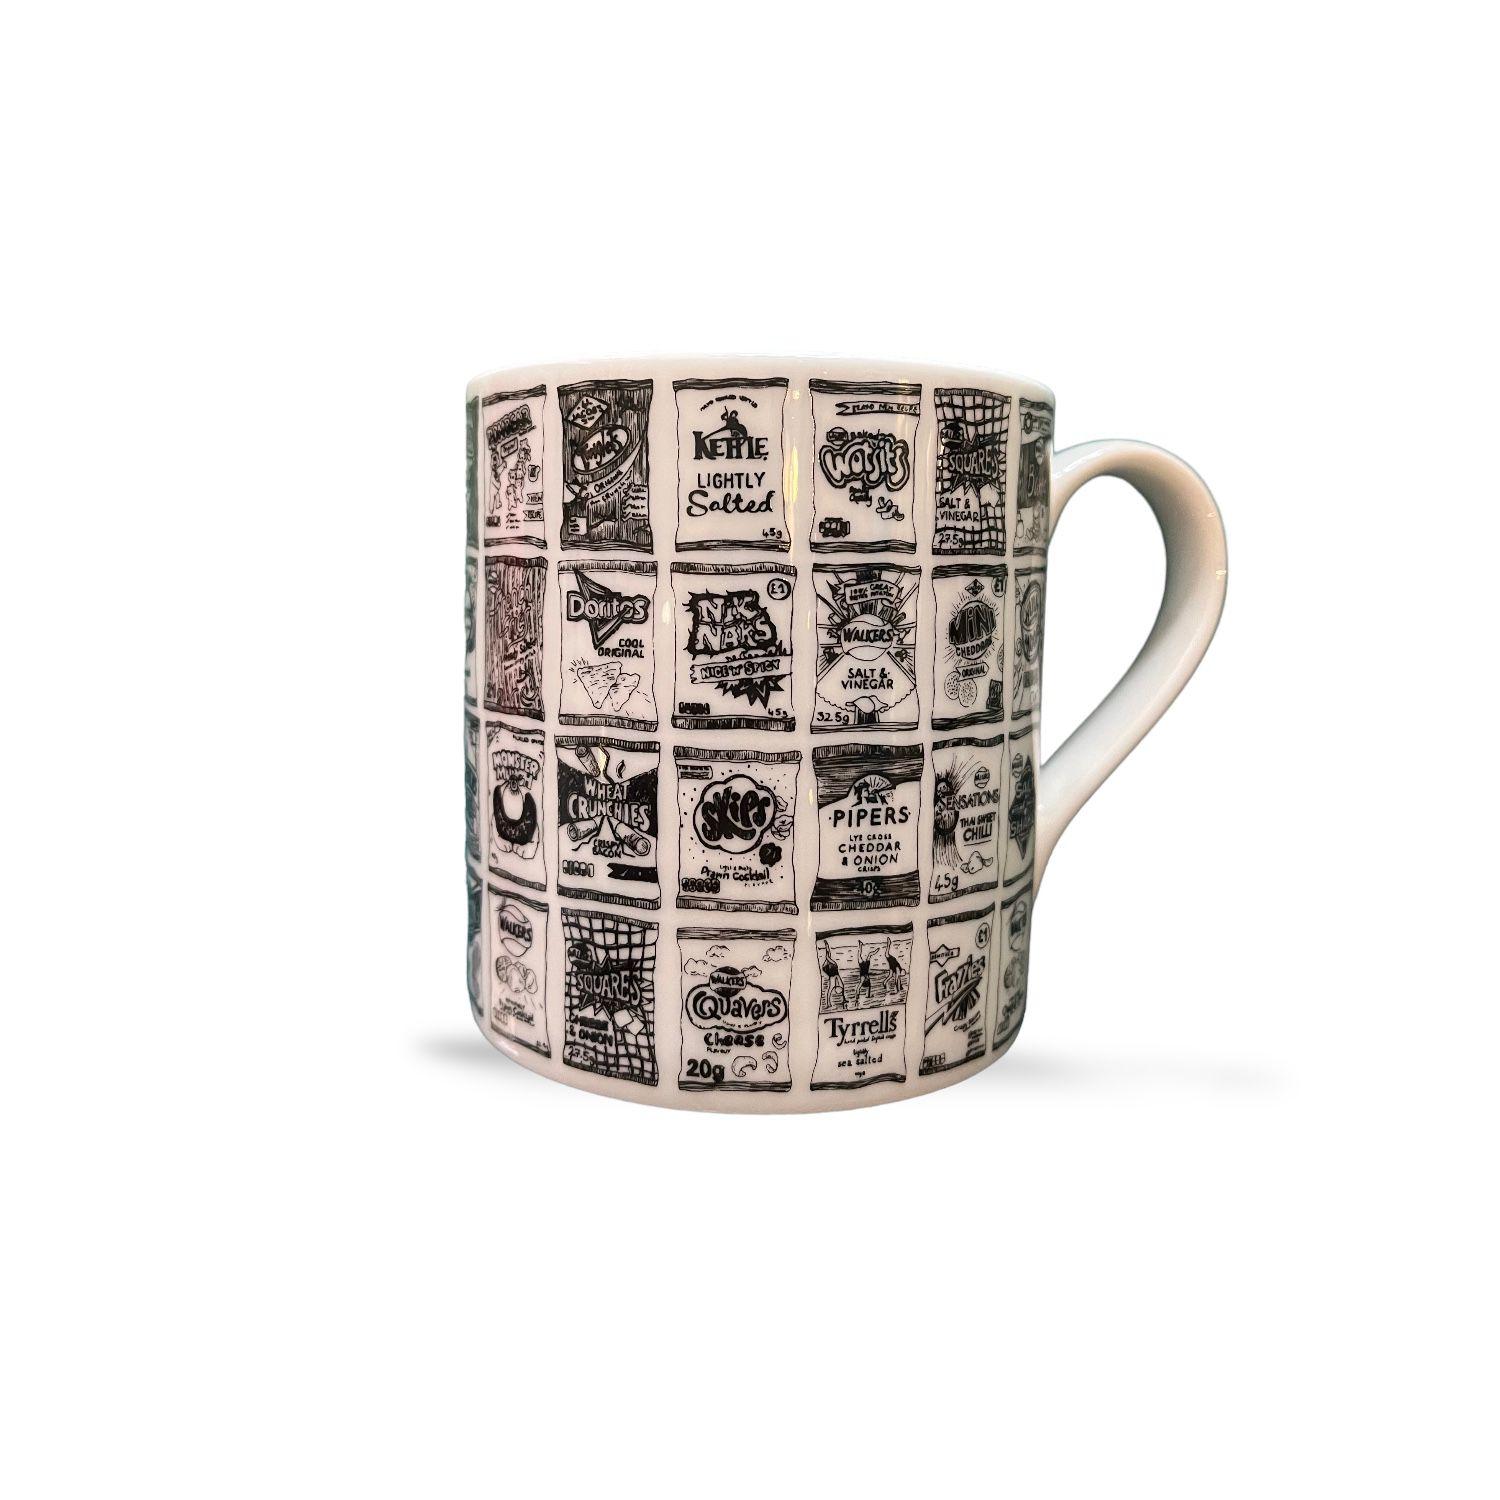 black and white Crisps mug by martha mitchell design